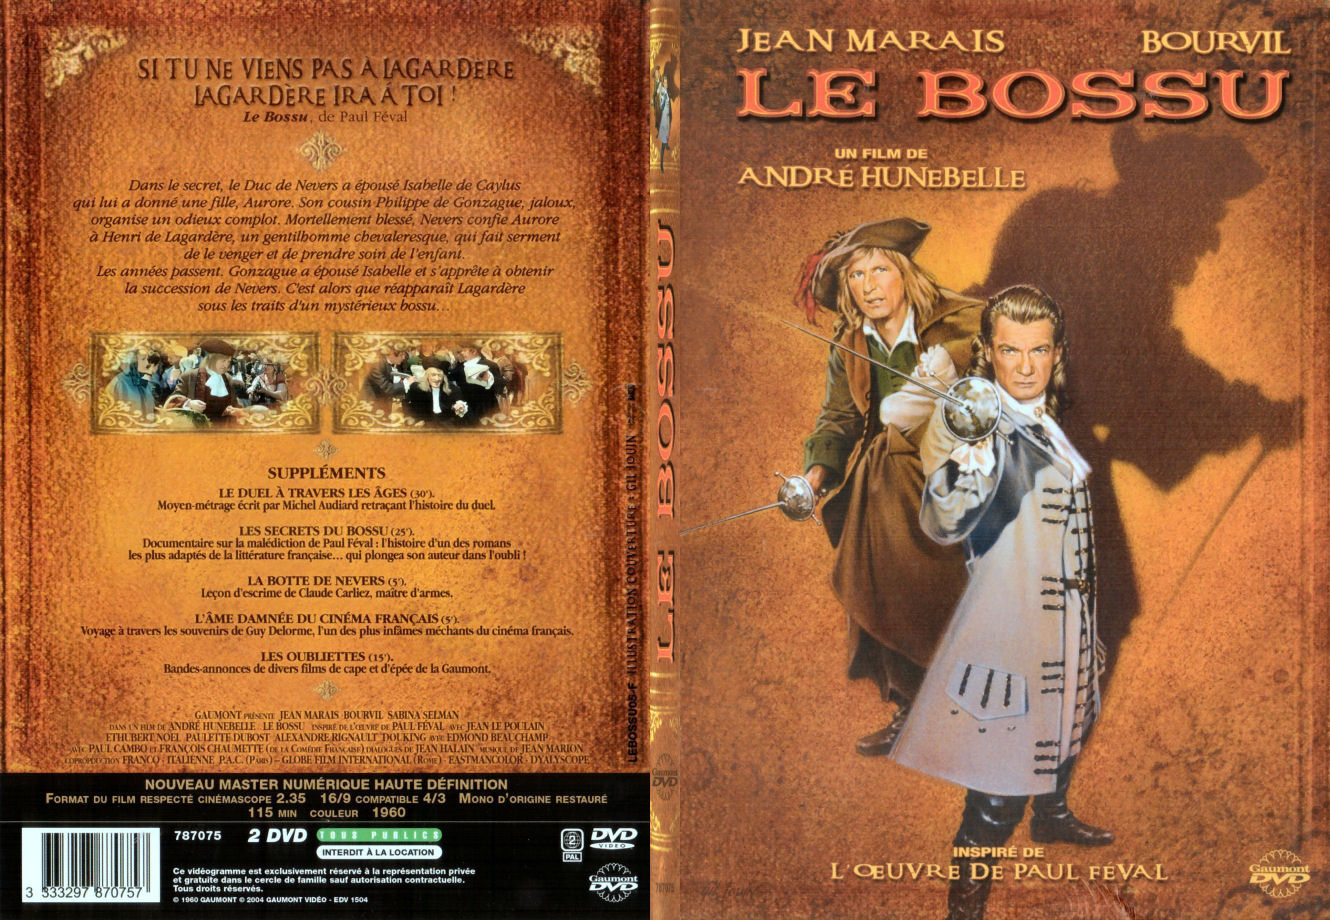 Jaquette DVD Le bossu - SLIM